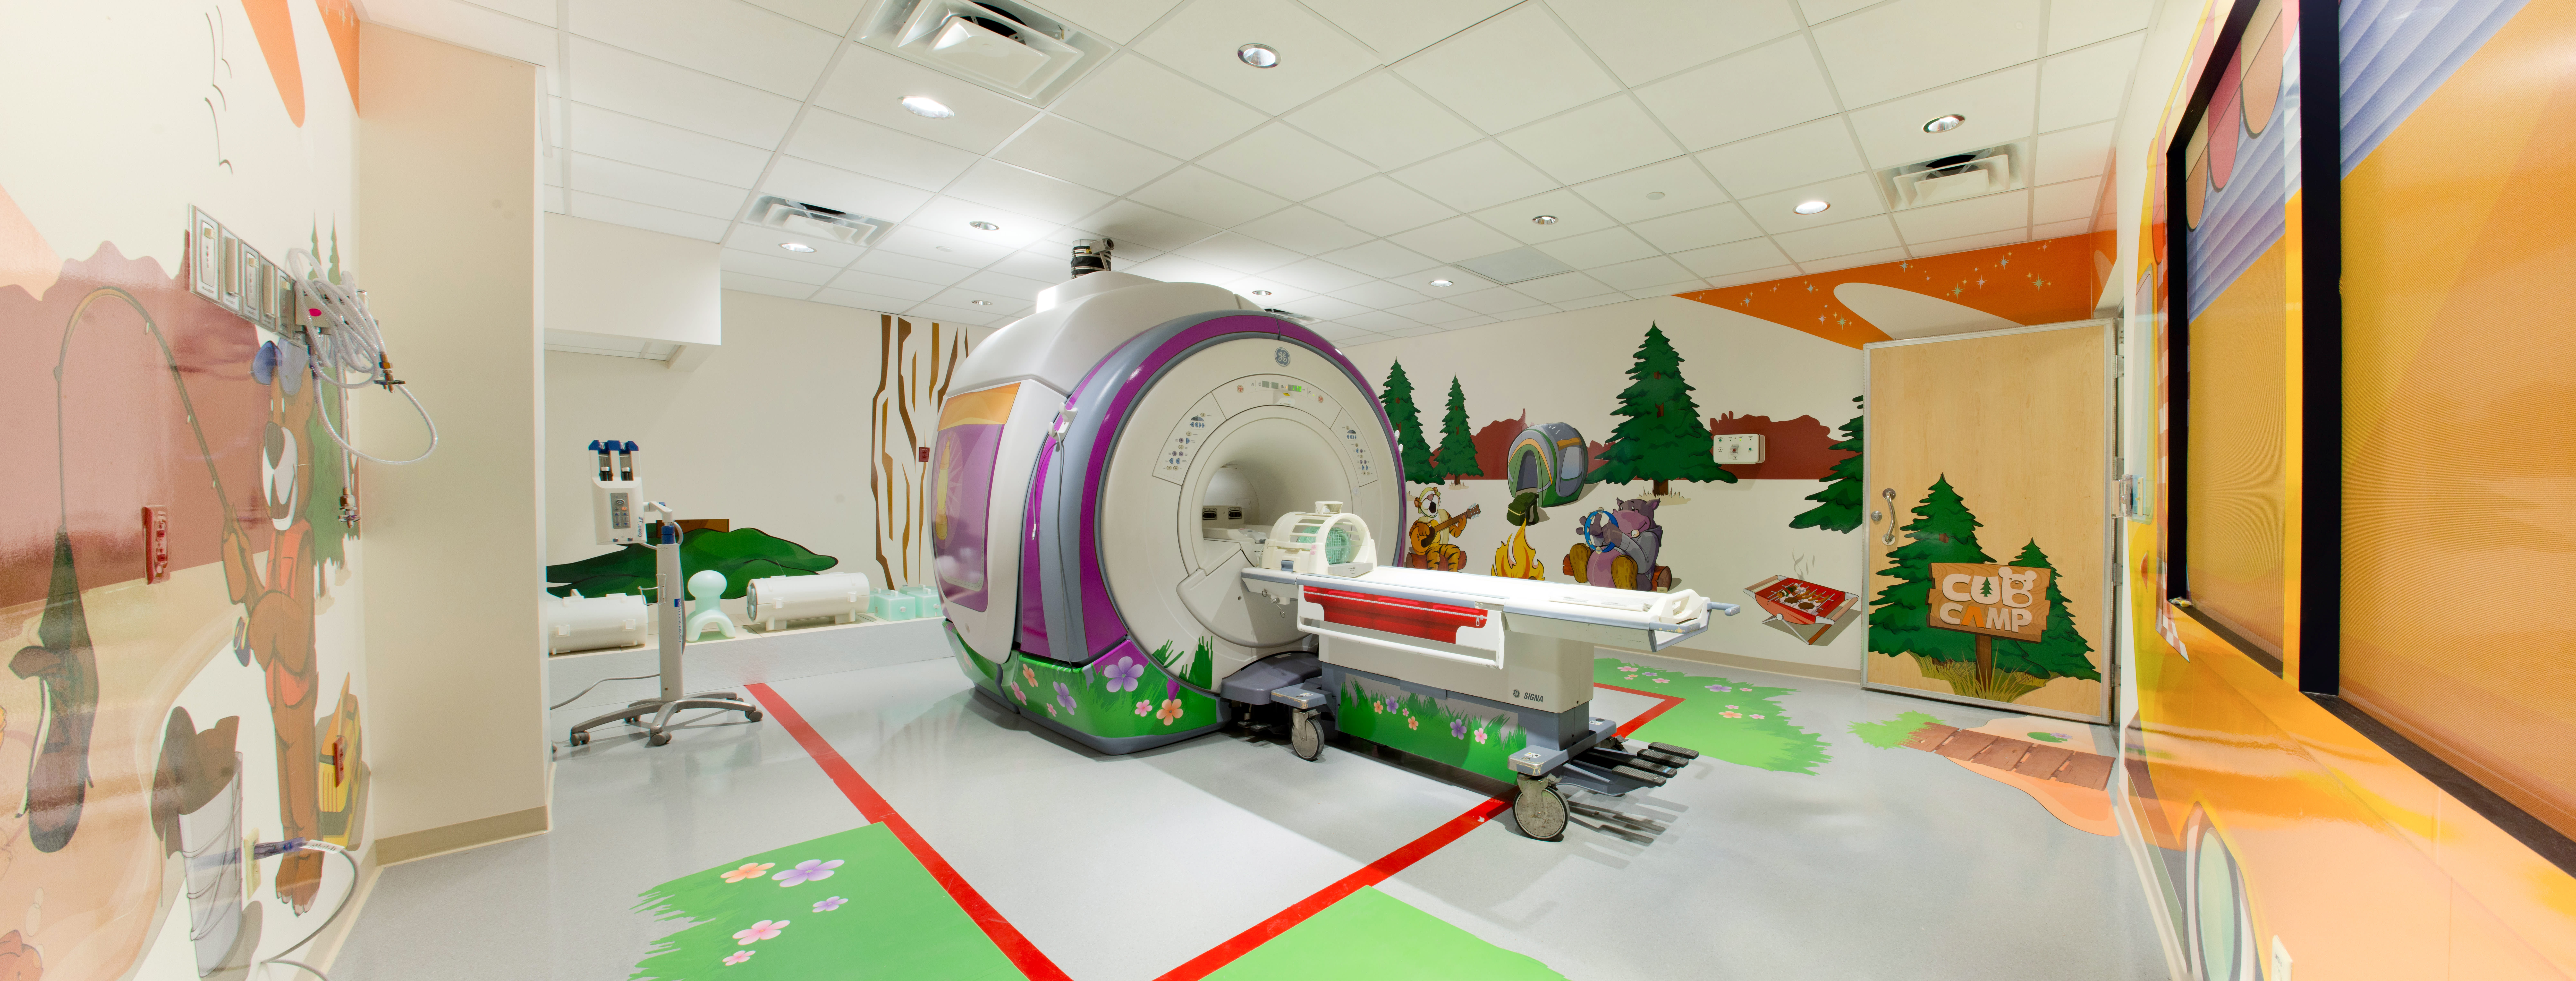 Pediatric MRI suite at Wolfson